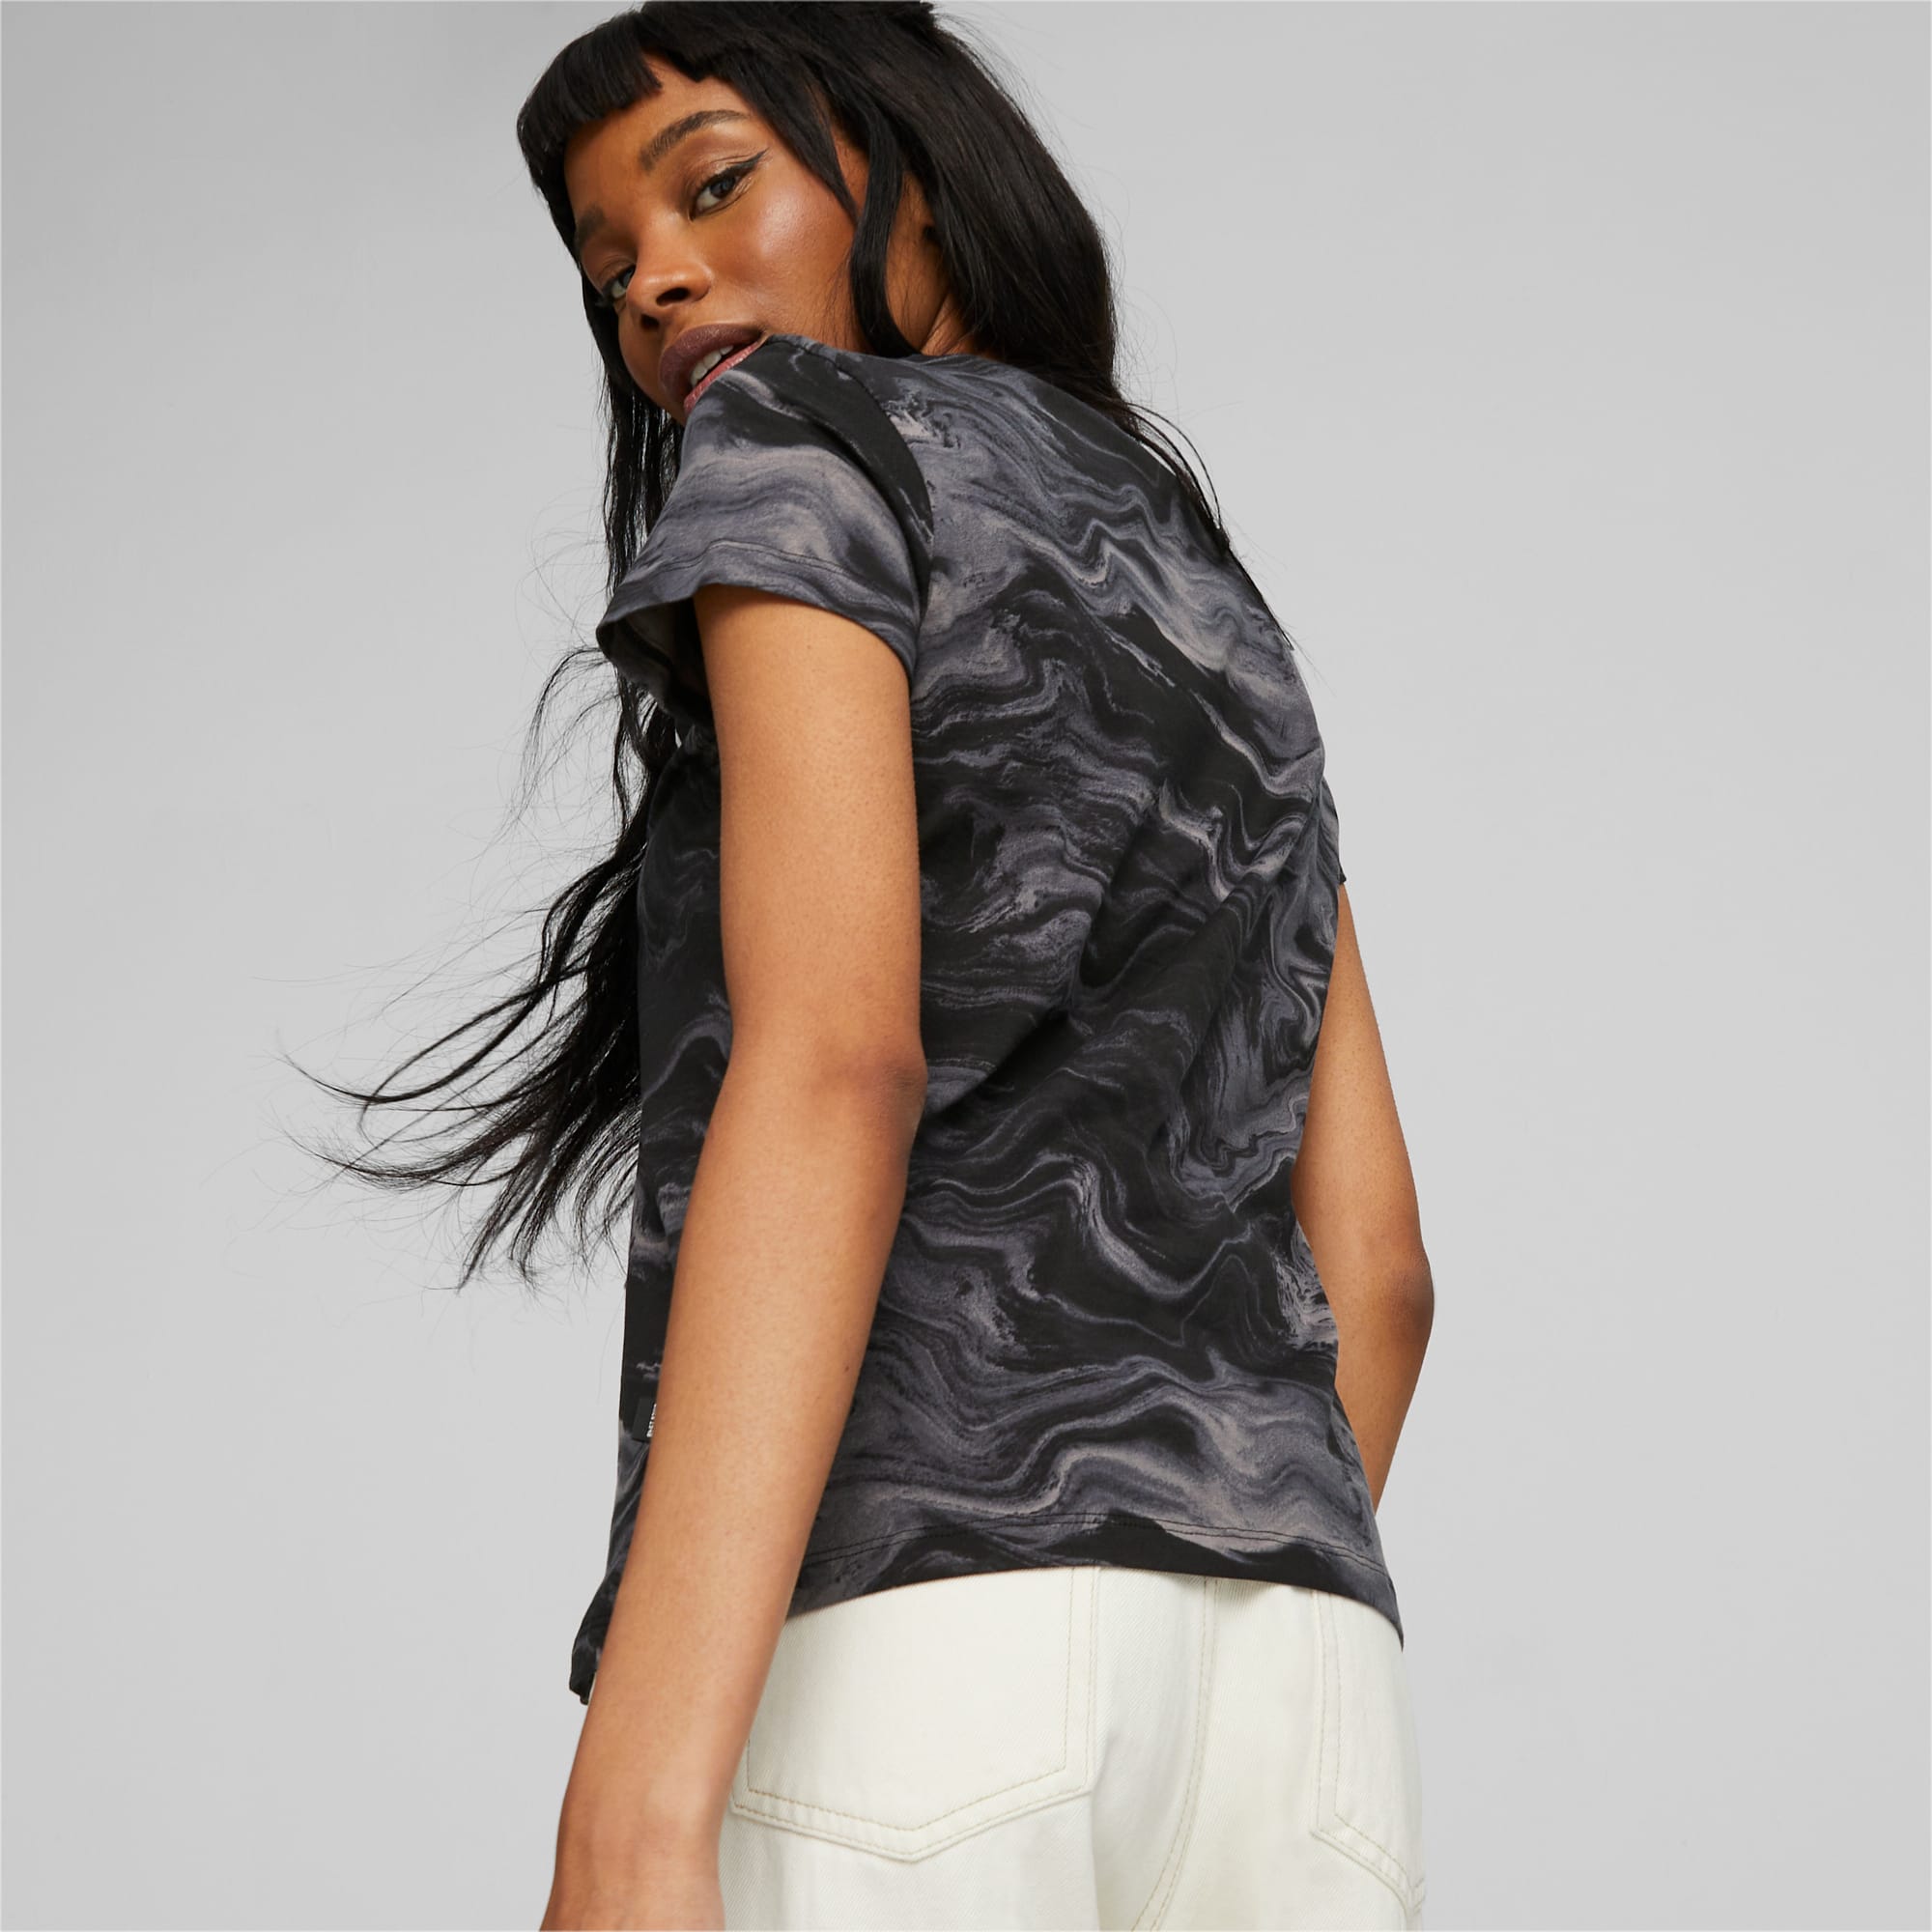 PUMA Ess+ Marbleized Women's T-Shirt, Black, Size XL, Clothing